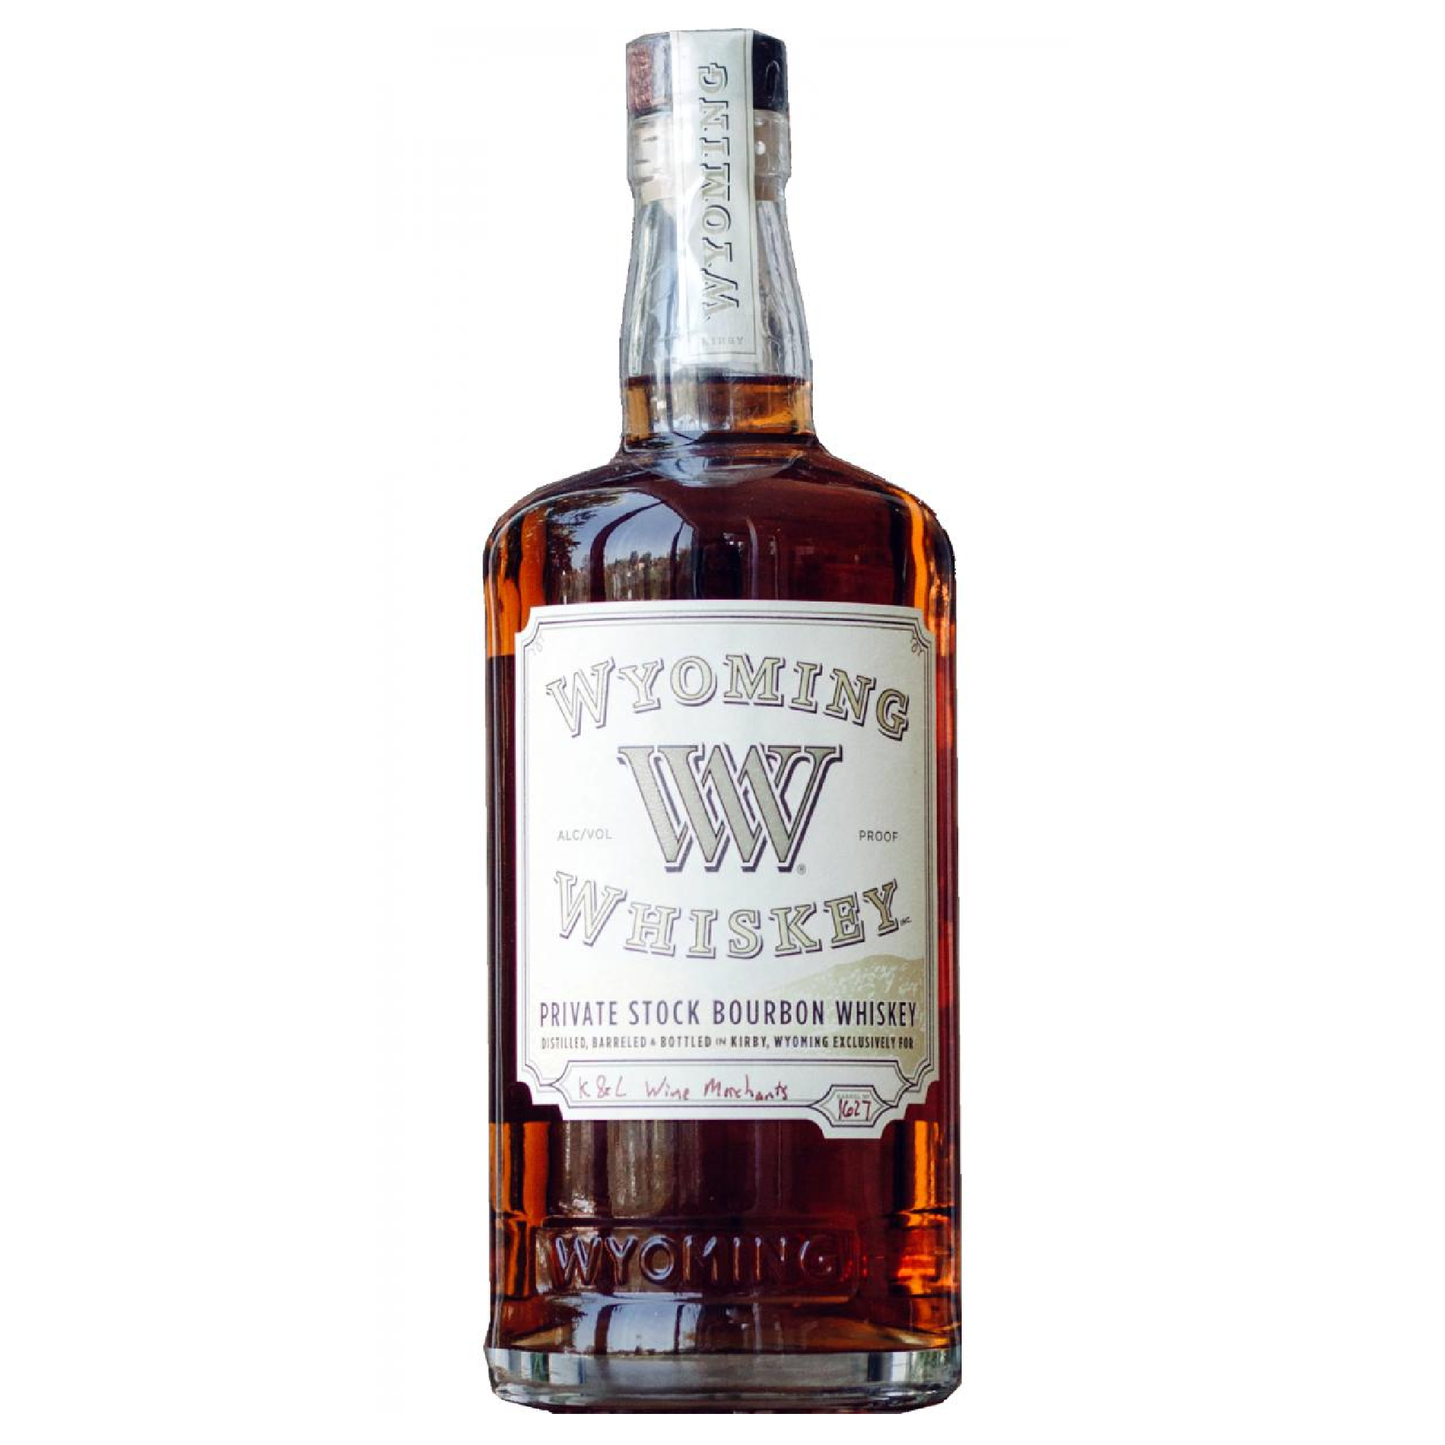 Wyoming Private Stck Bourbon Wsk 115.6 - Liquor Geeks